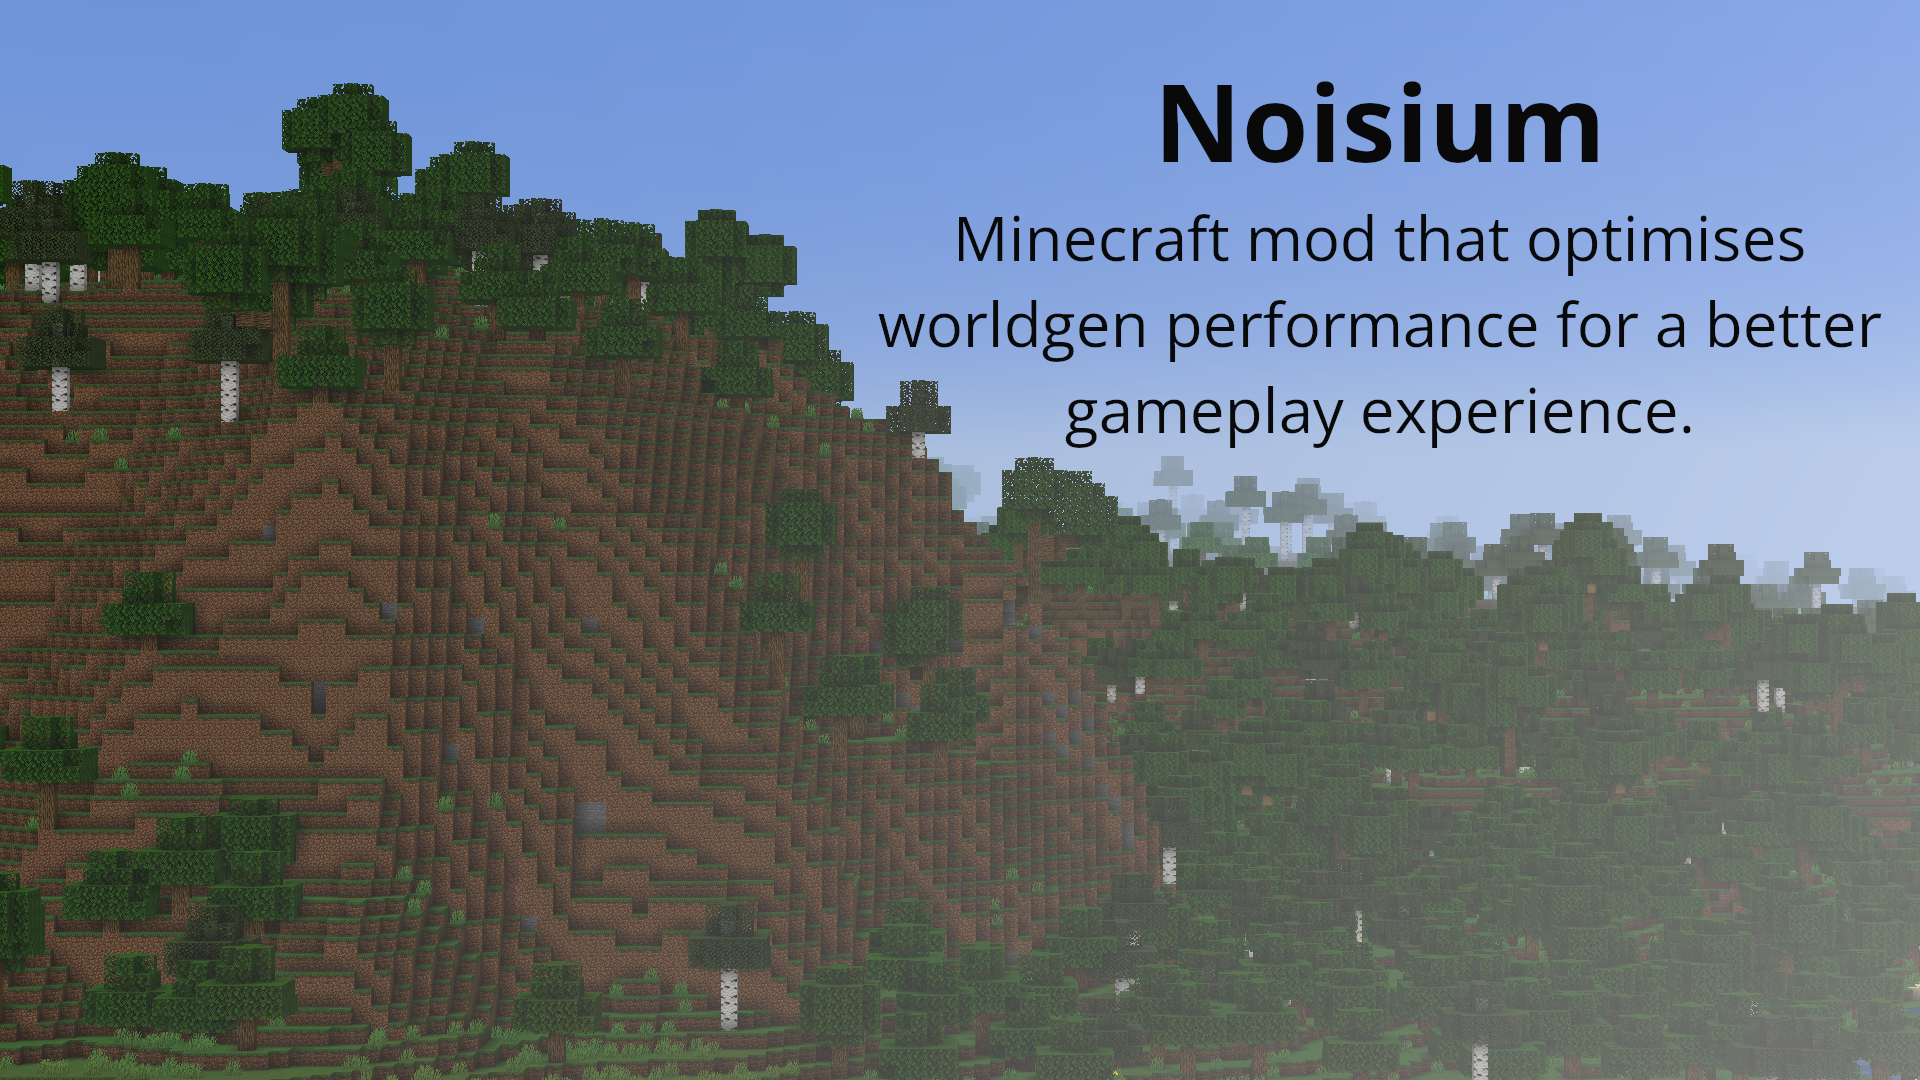 Alt text: Noisium - Minecraft mod that optimises worldgen performance for a better gameplay experience.